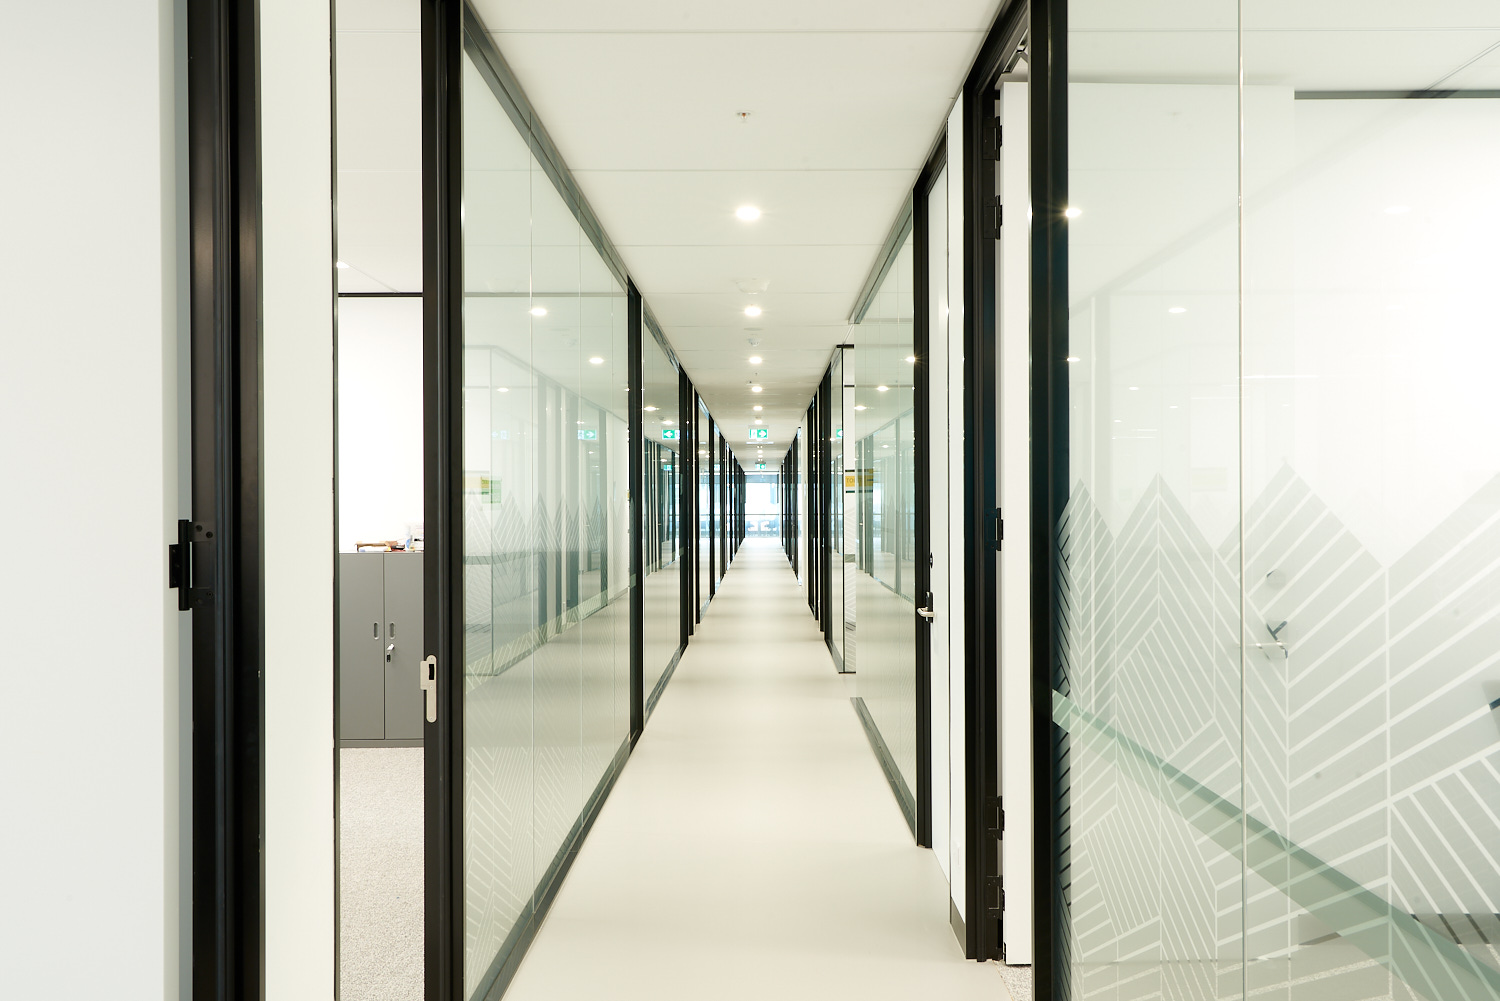 Interior Office Design Corridor with Office Suites Photo